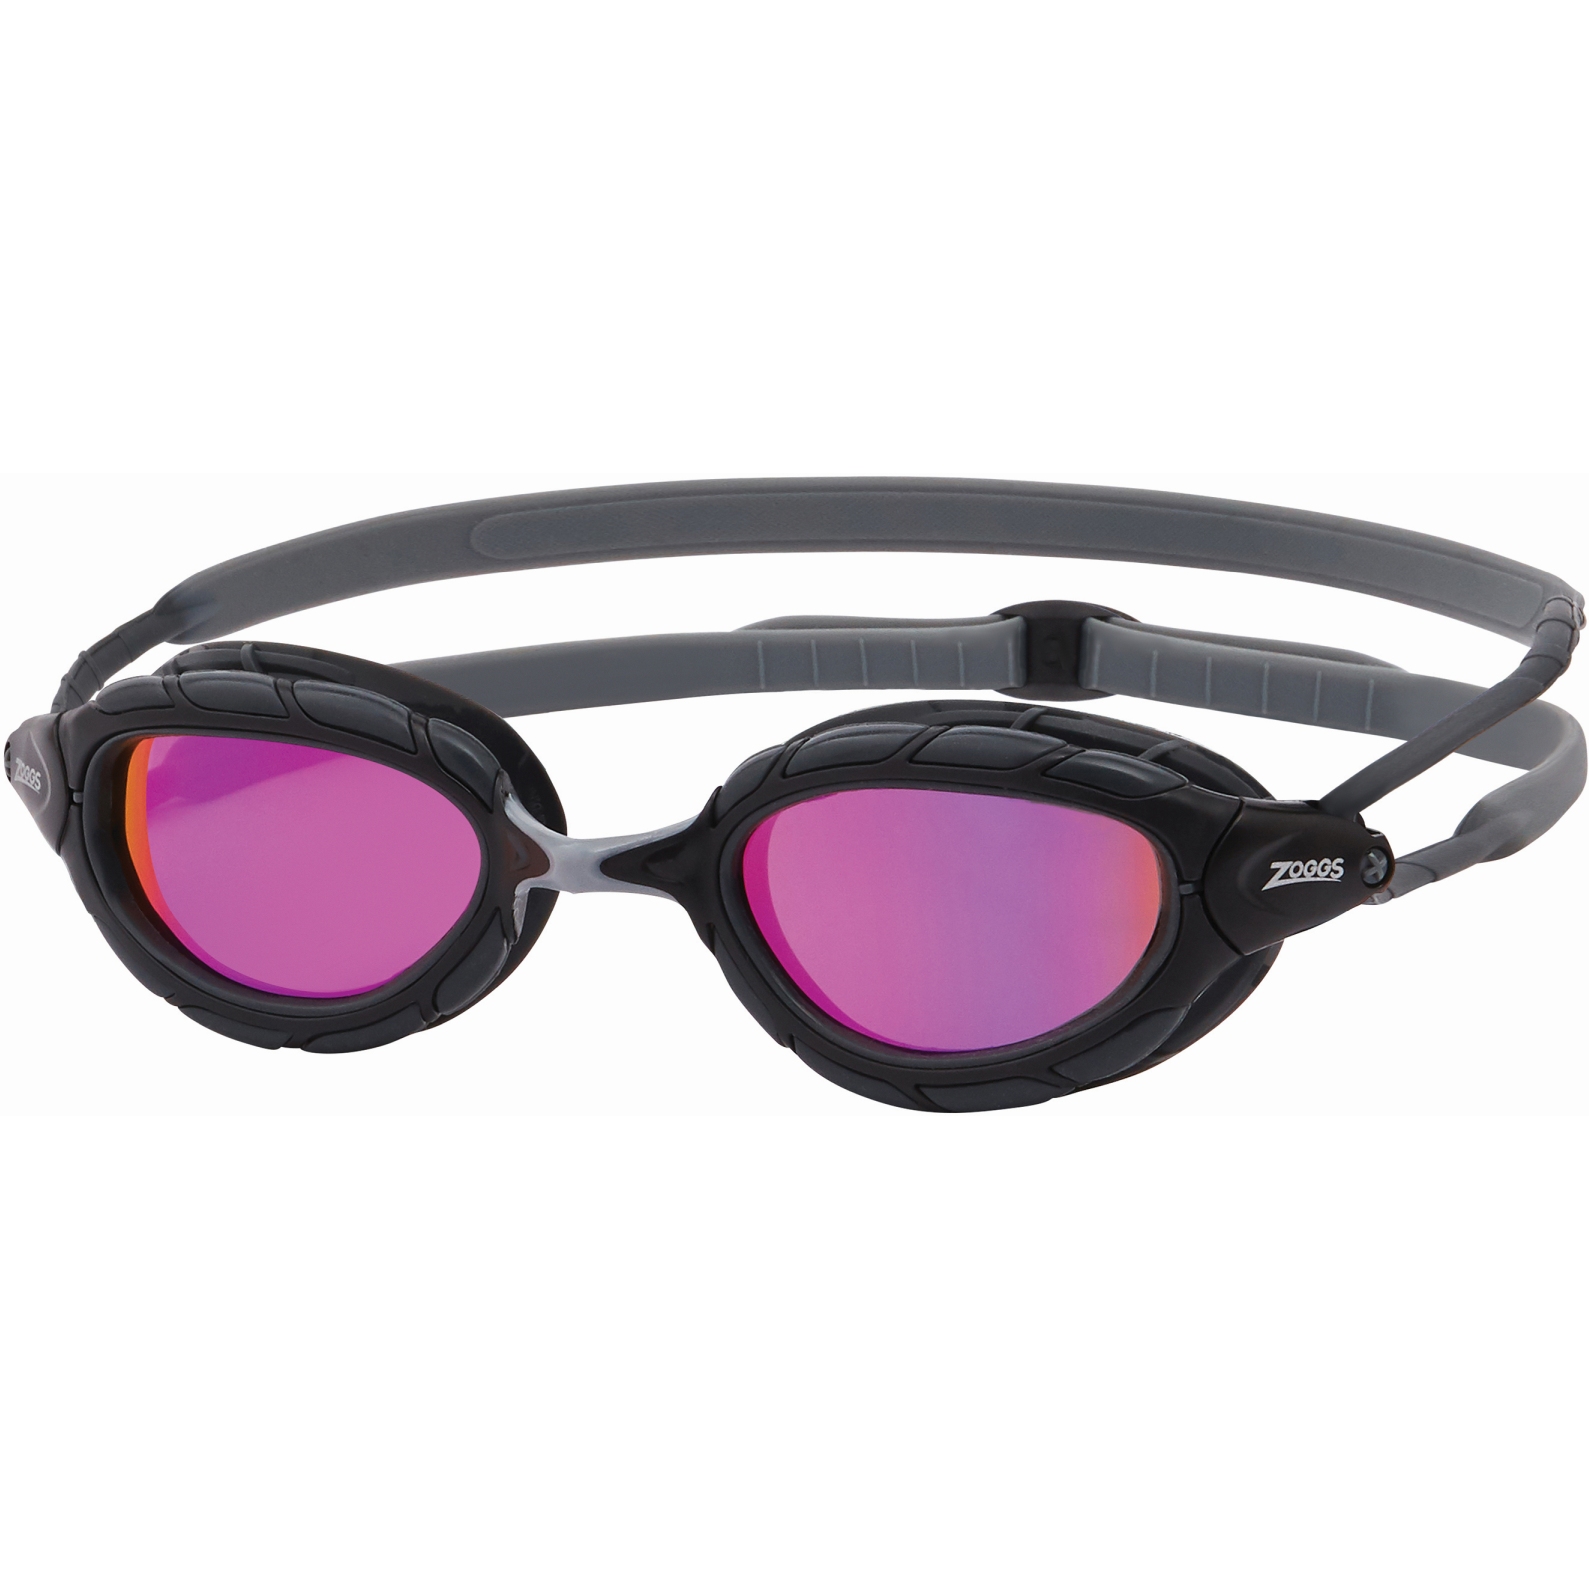 Productfoto van Zoggs Predator Titanium Zwembril - Mirror Pink Lenses - Regular Fit - Grey/Black